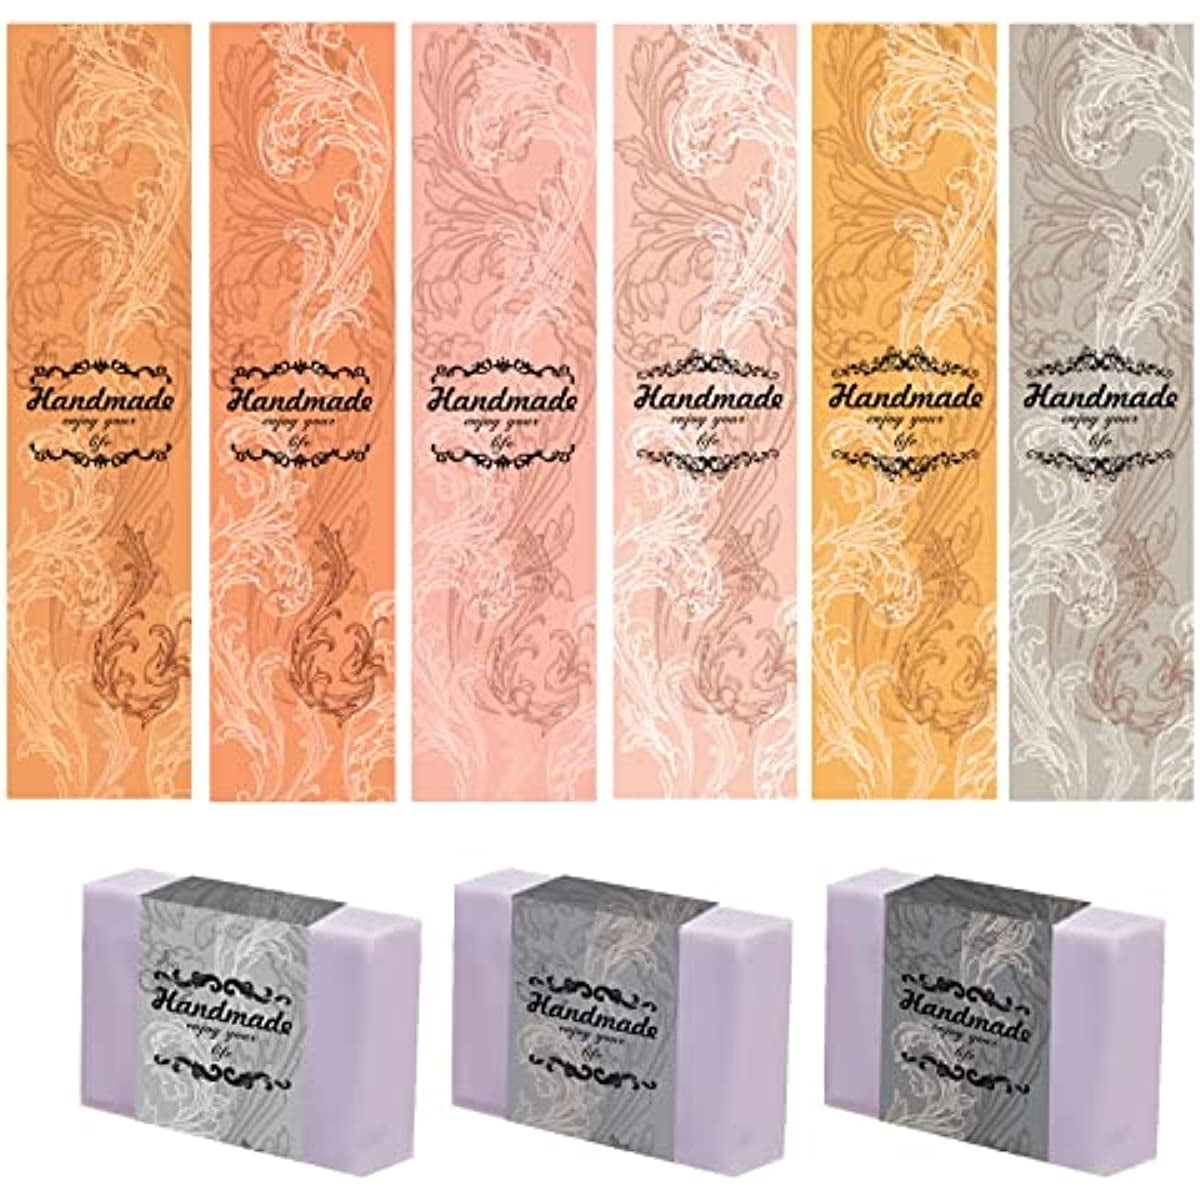 10 Custom SOAP Wrap Sheets soap Packaging bar Soap Wrap custom Packaging  soap Display Full Sheet Soap Wrap VINTAGE FLORAL 1 